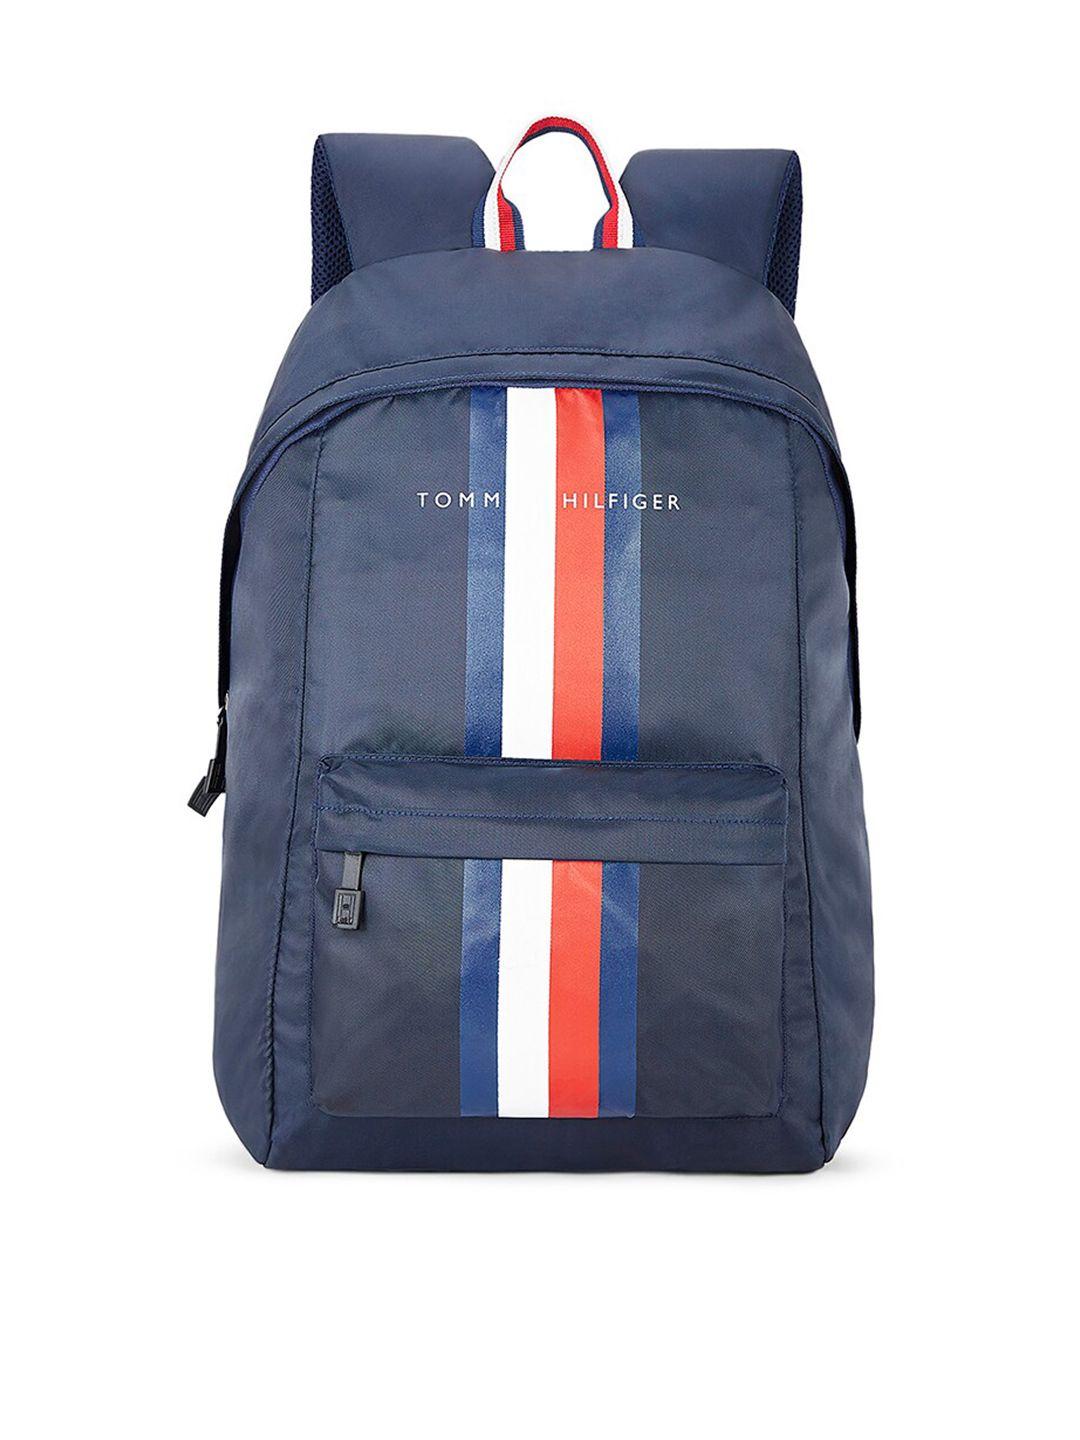 tommy hilfiger water resistant laptop backpack